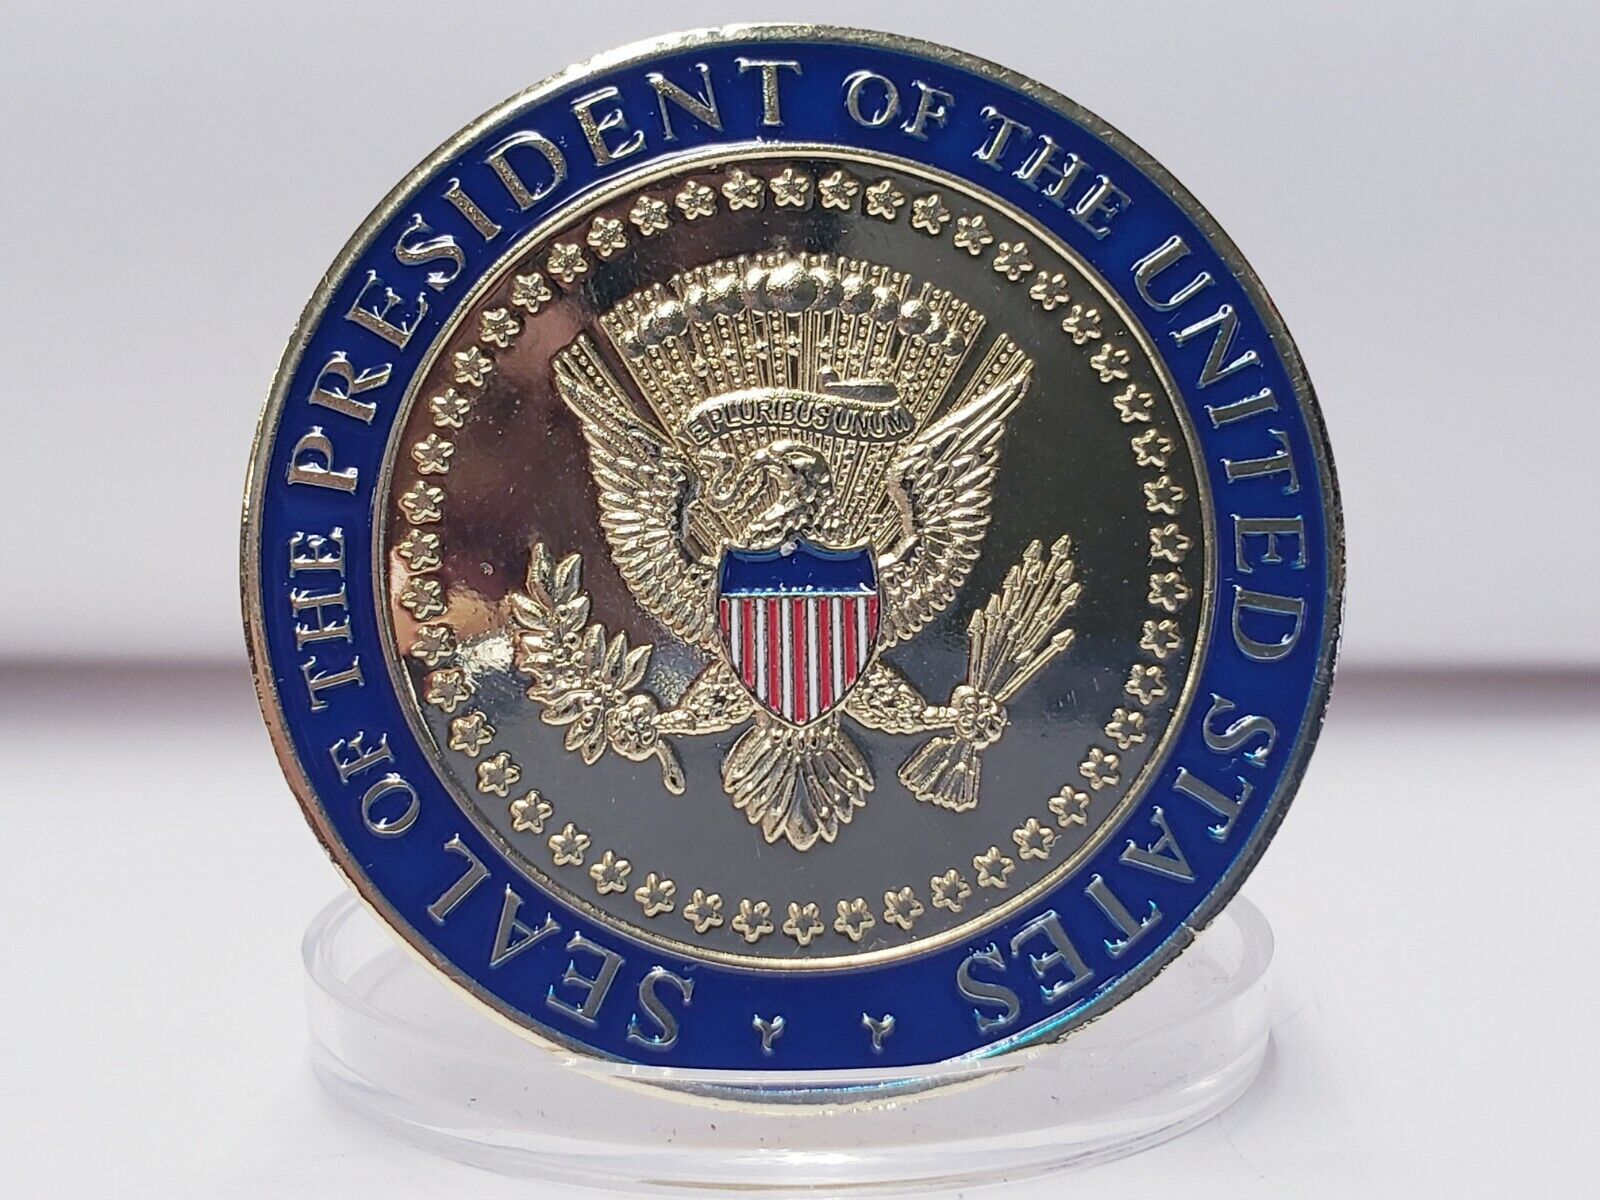 44th Barack Obama Challenge Coin